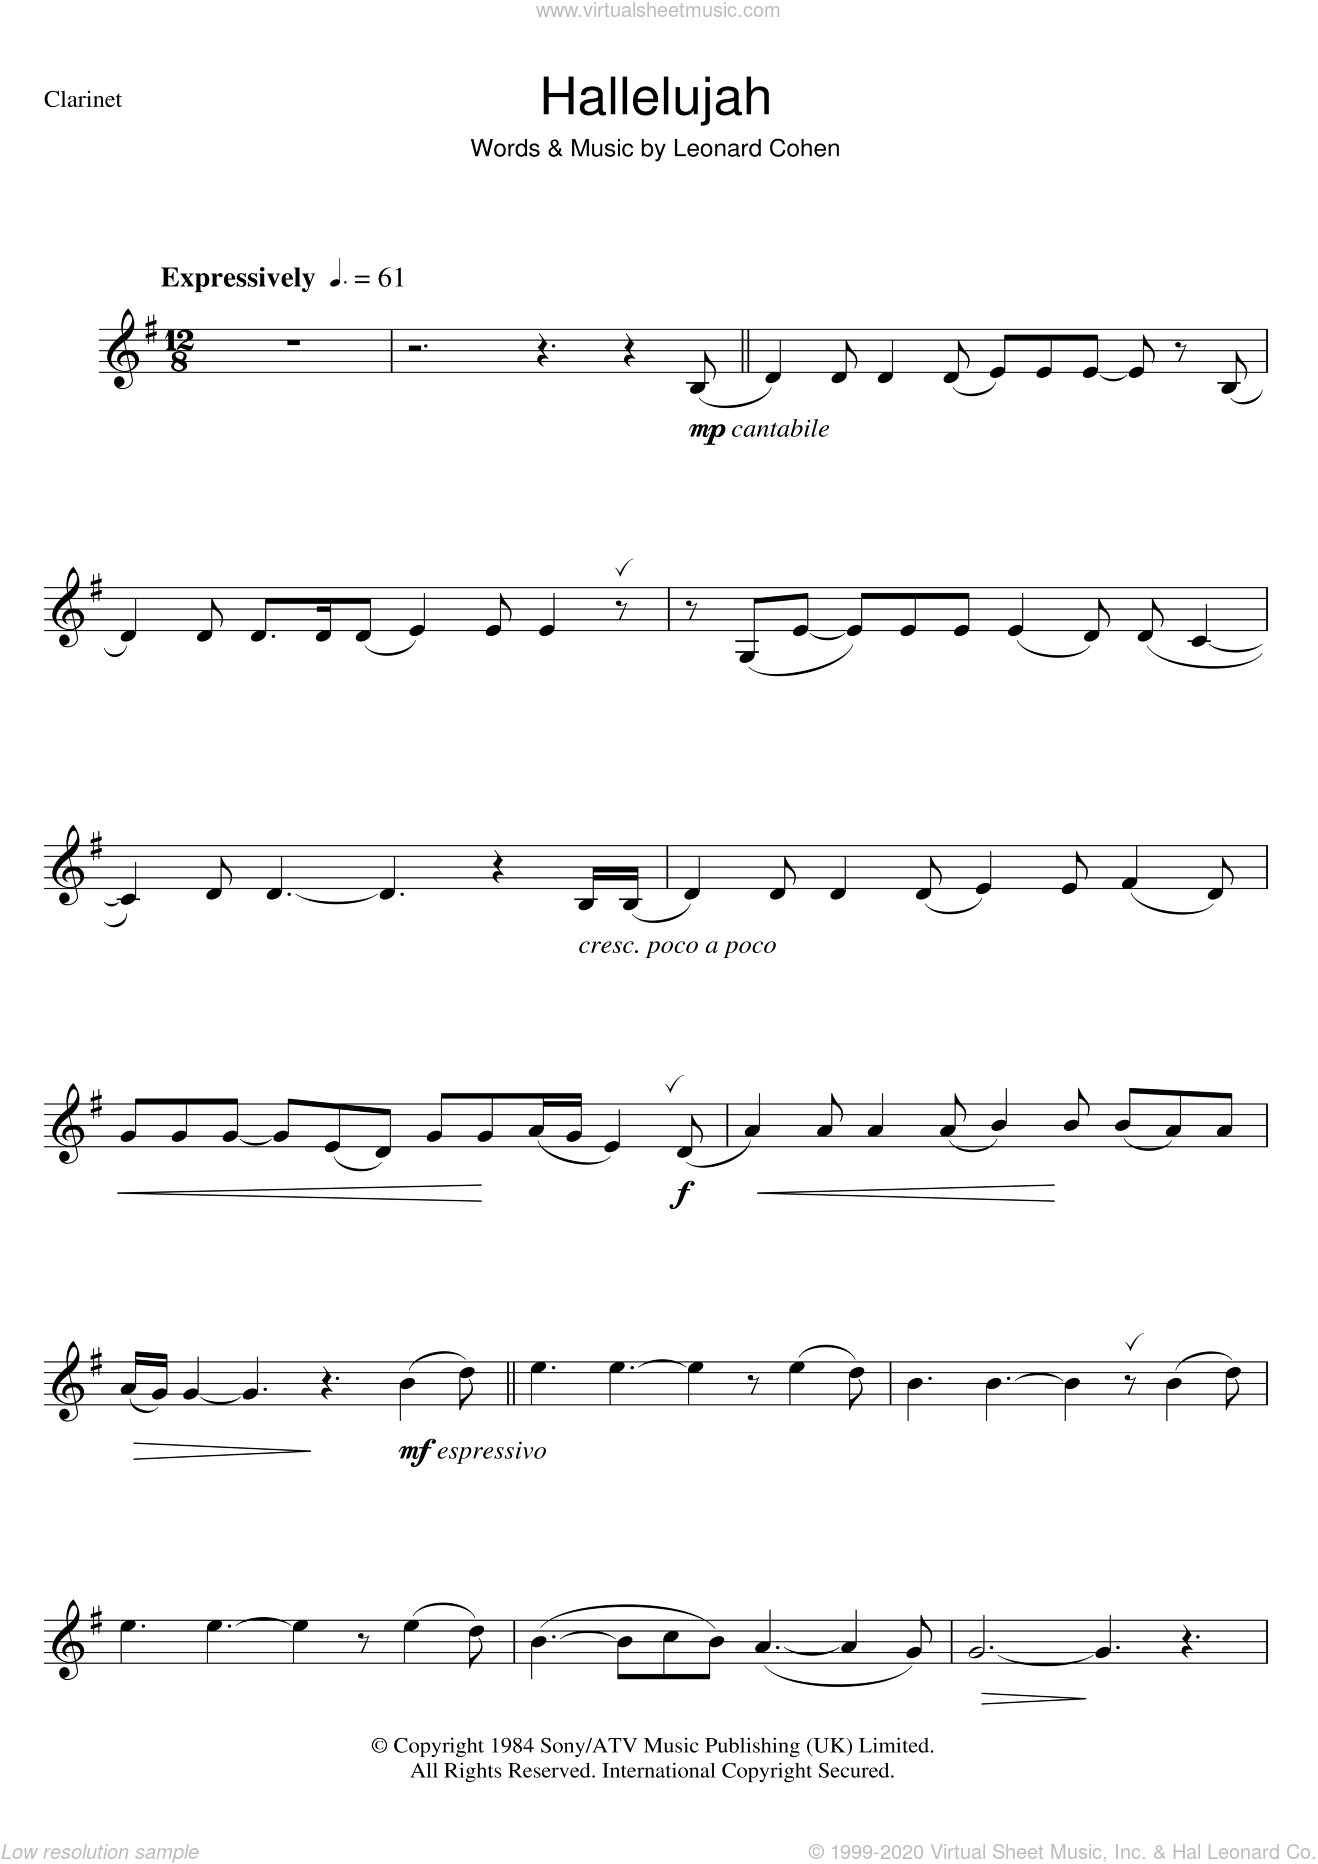 Burke - Hallelujah sheet music for clarinet solo [PDF]